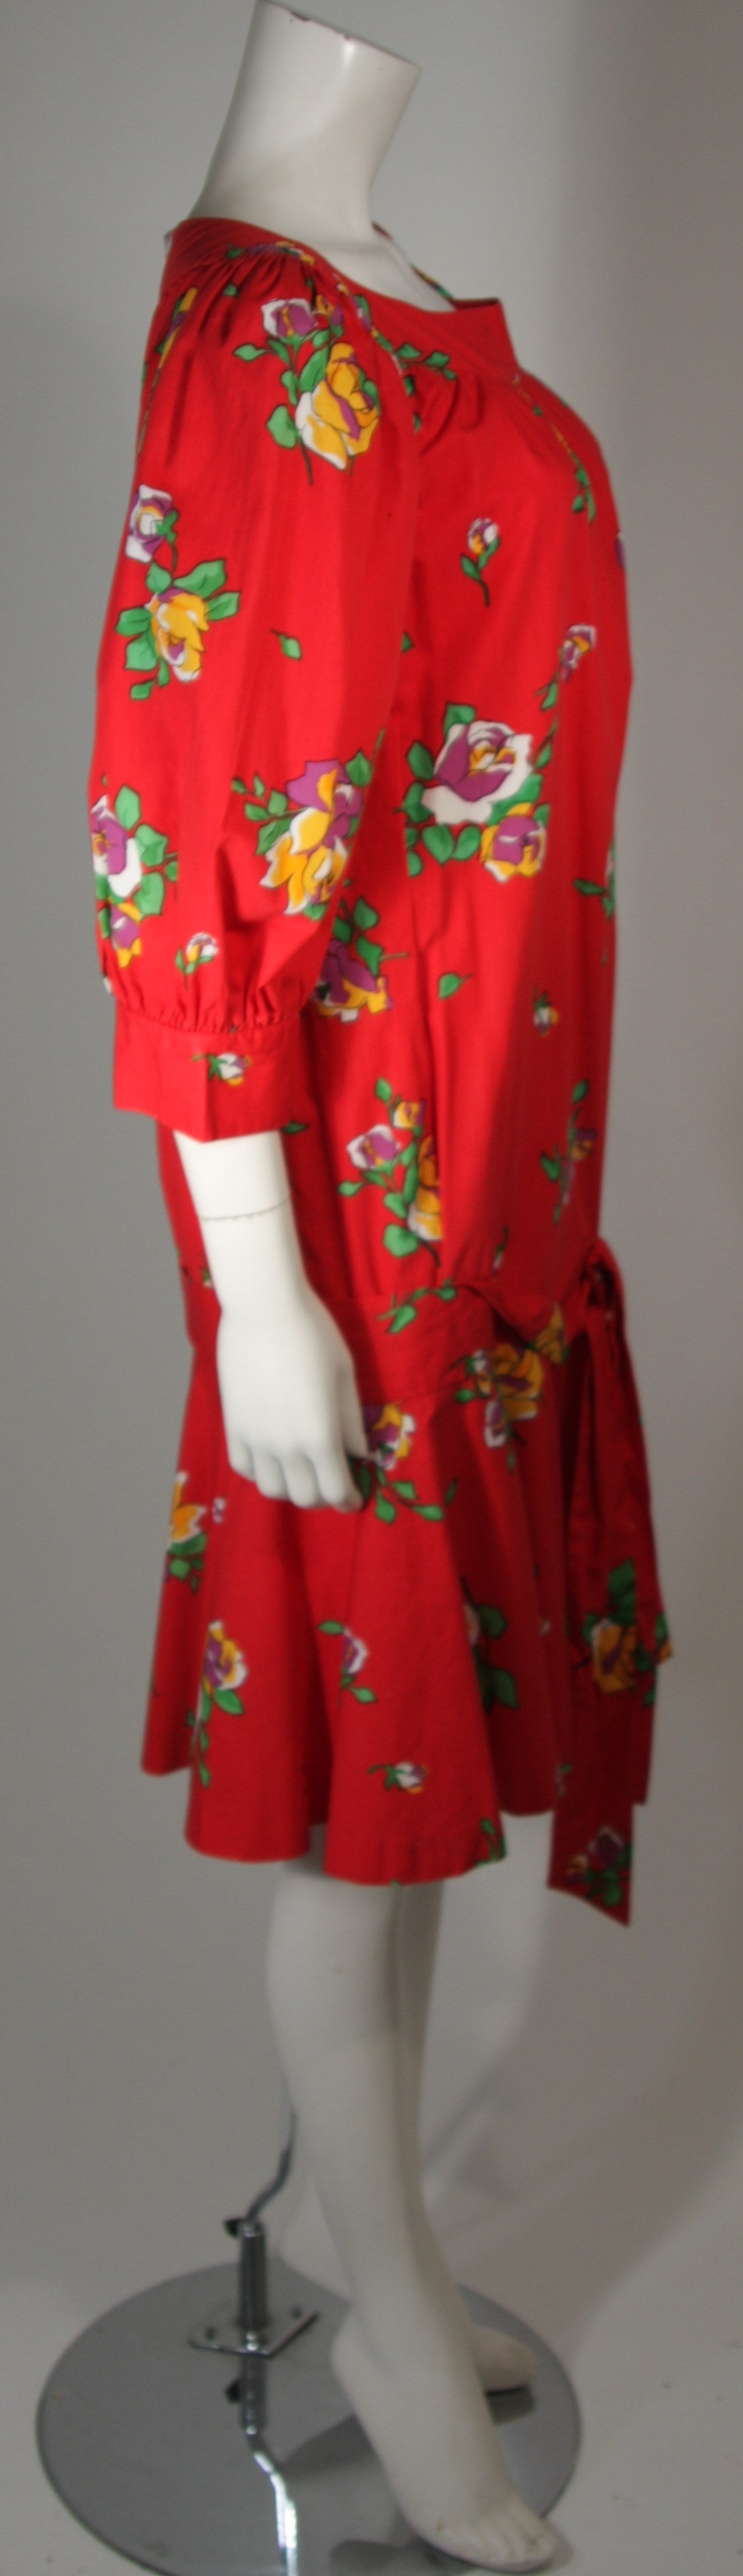 Yves Saint Laurent Red Cotton Drop Waist Dress with Floral Motif Size 36 For Sale 2